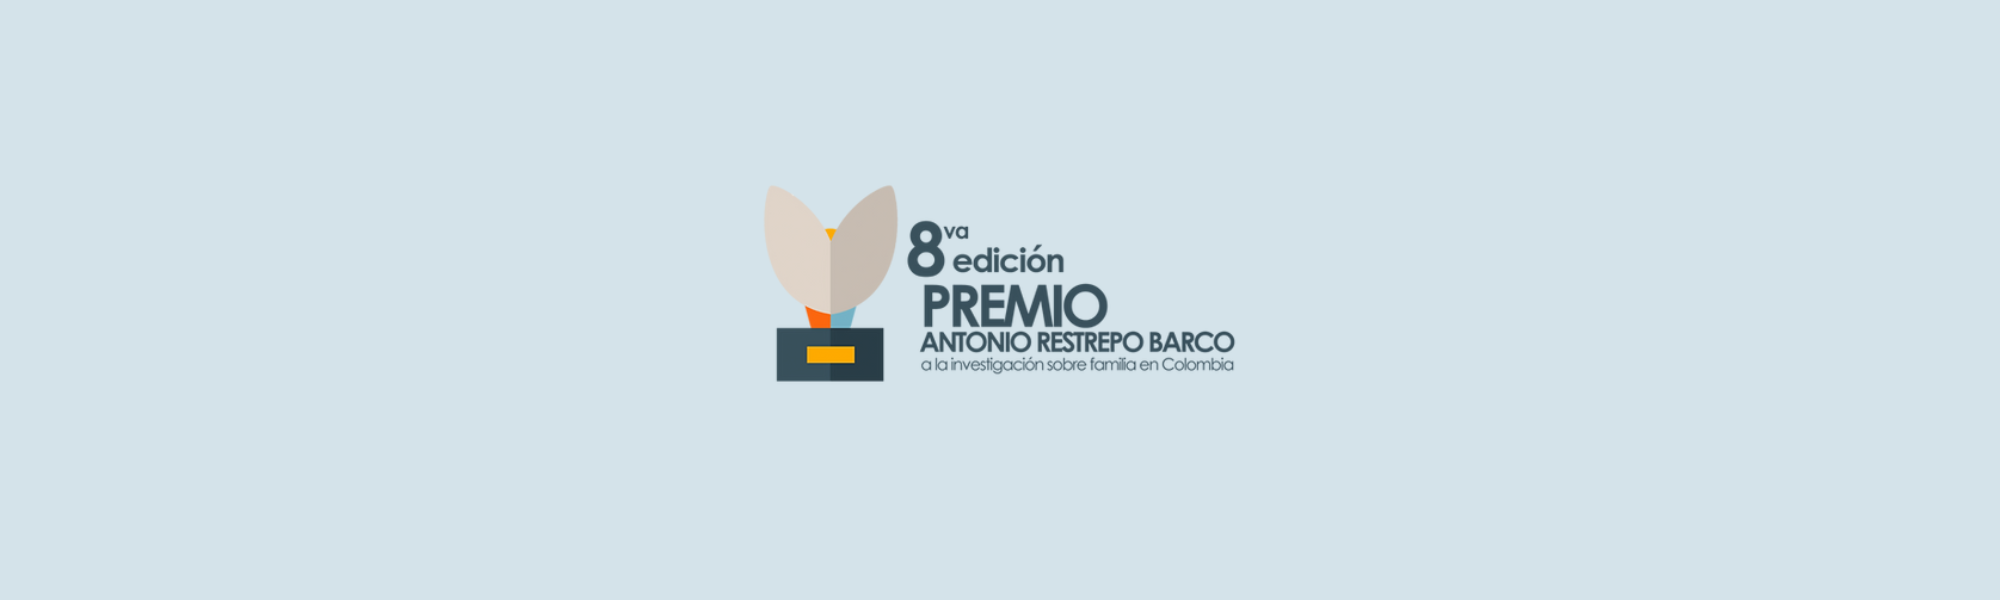 Octava-edicion-premio-Antonio-Restrepo-Barco.png